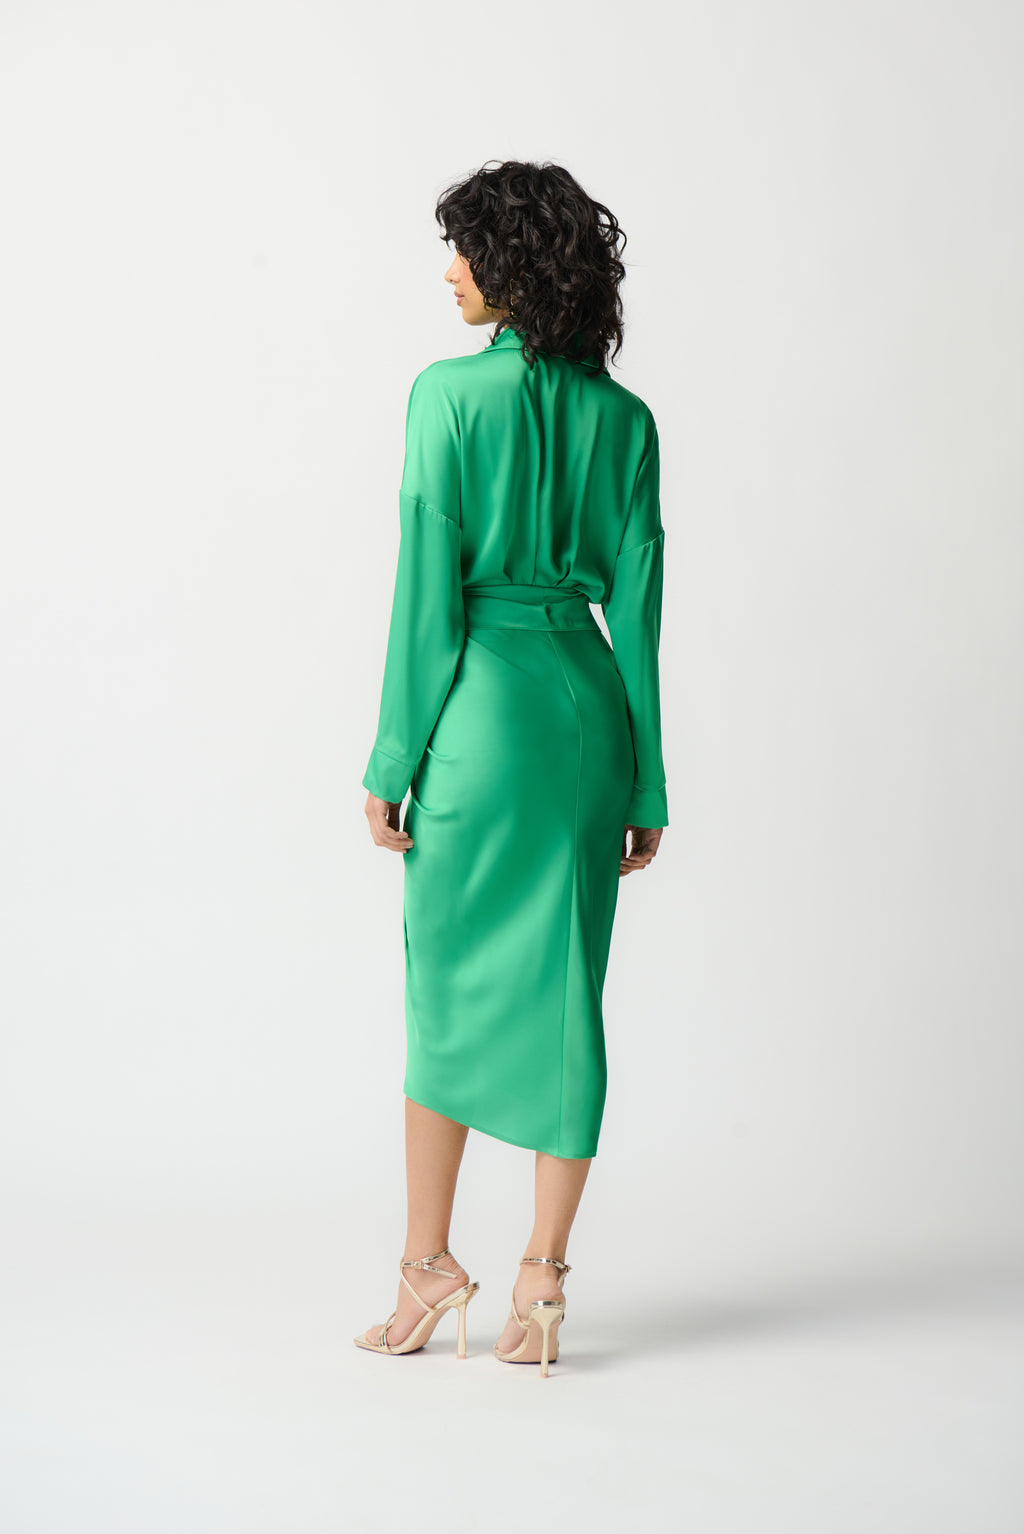 Joseph Ribkoff Island Green Satin Shirt Dress Style 241236